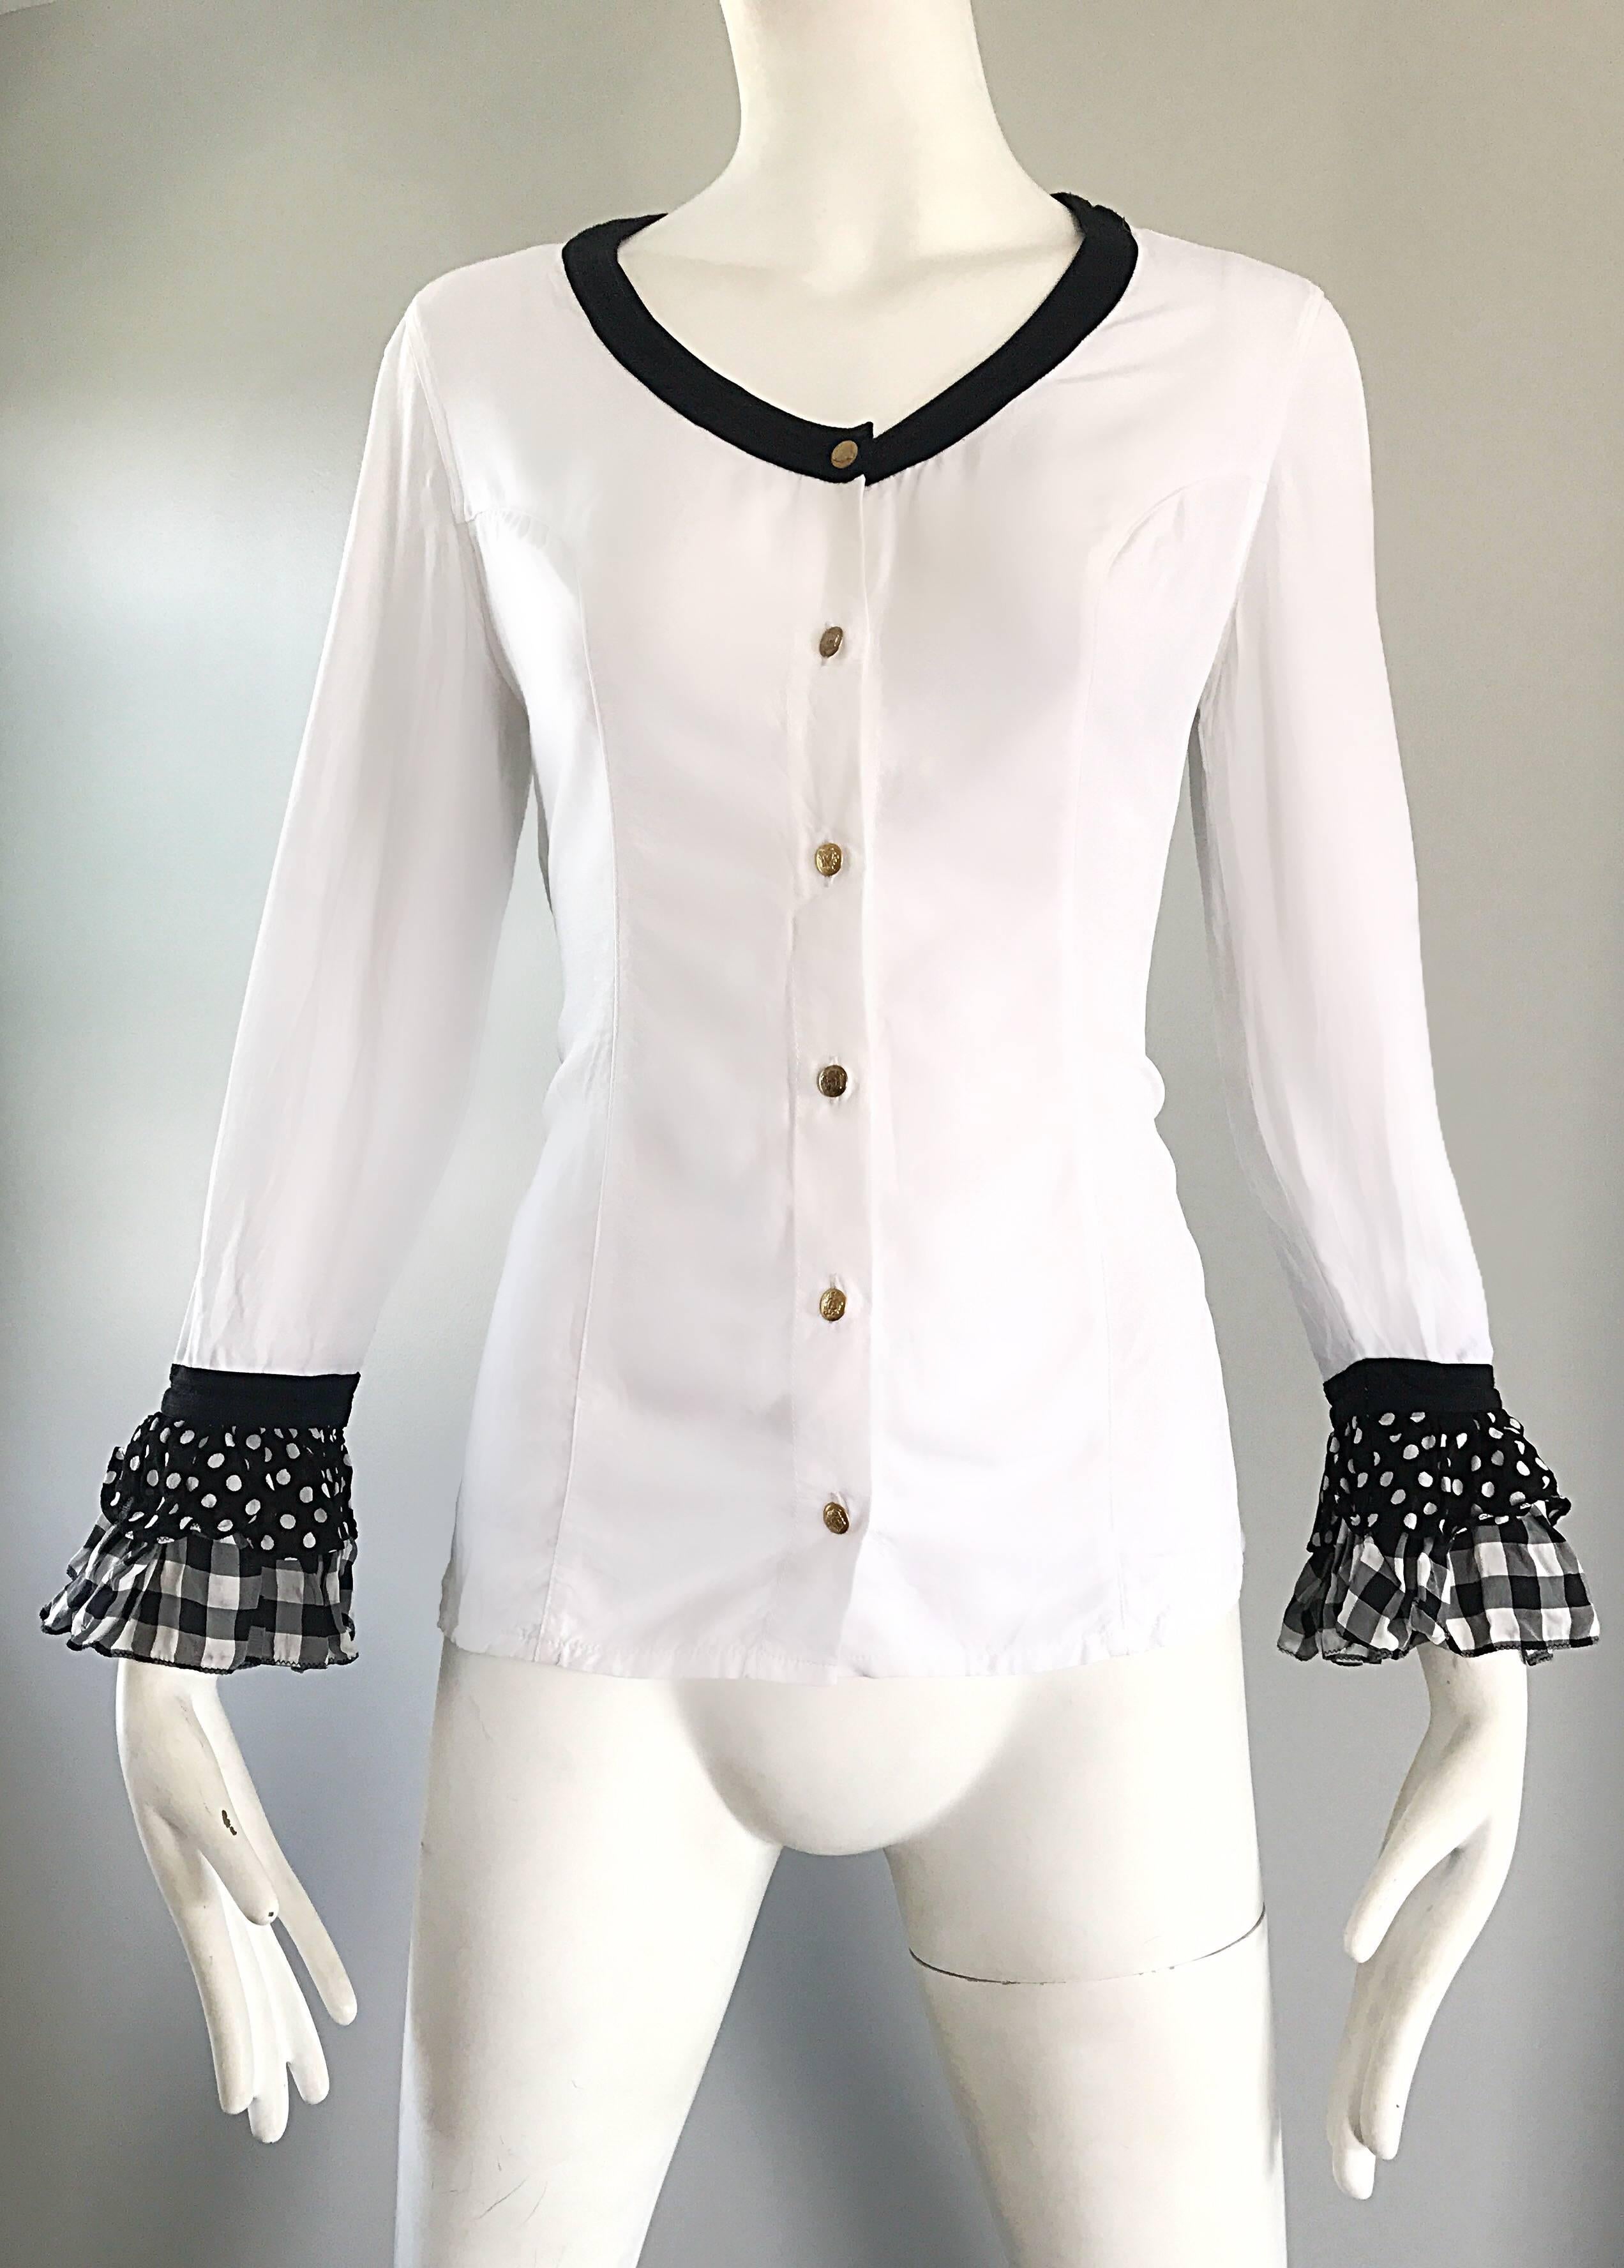 90s white blouse